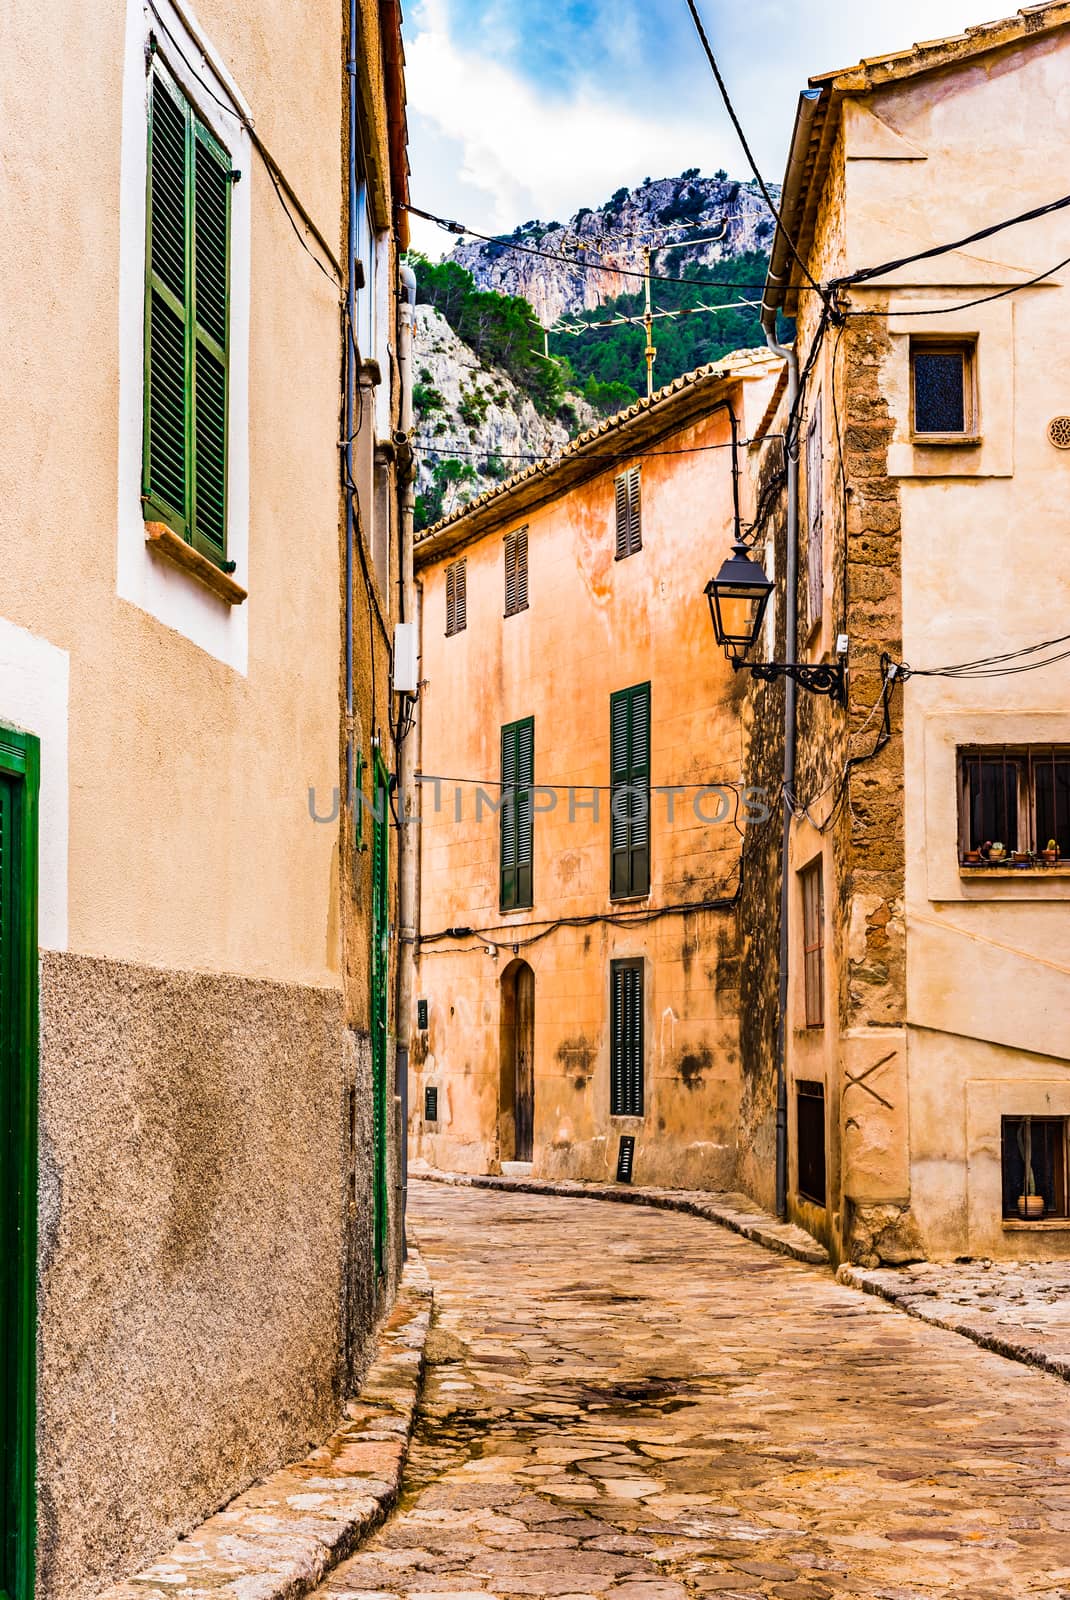 

Idyllic old mediterranean village with narrow alley way  by Vulcano